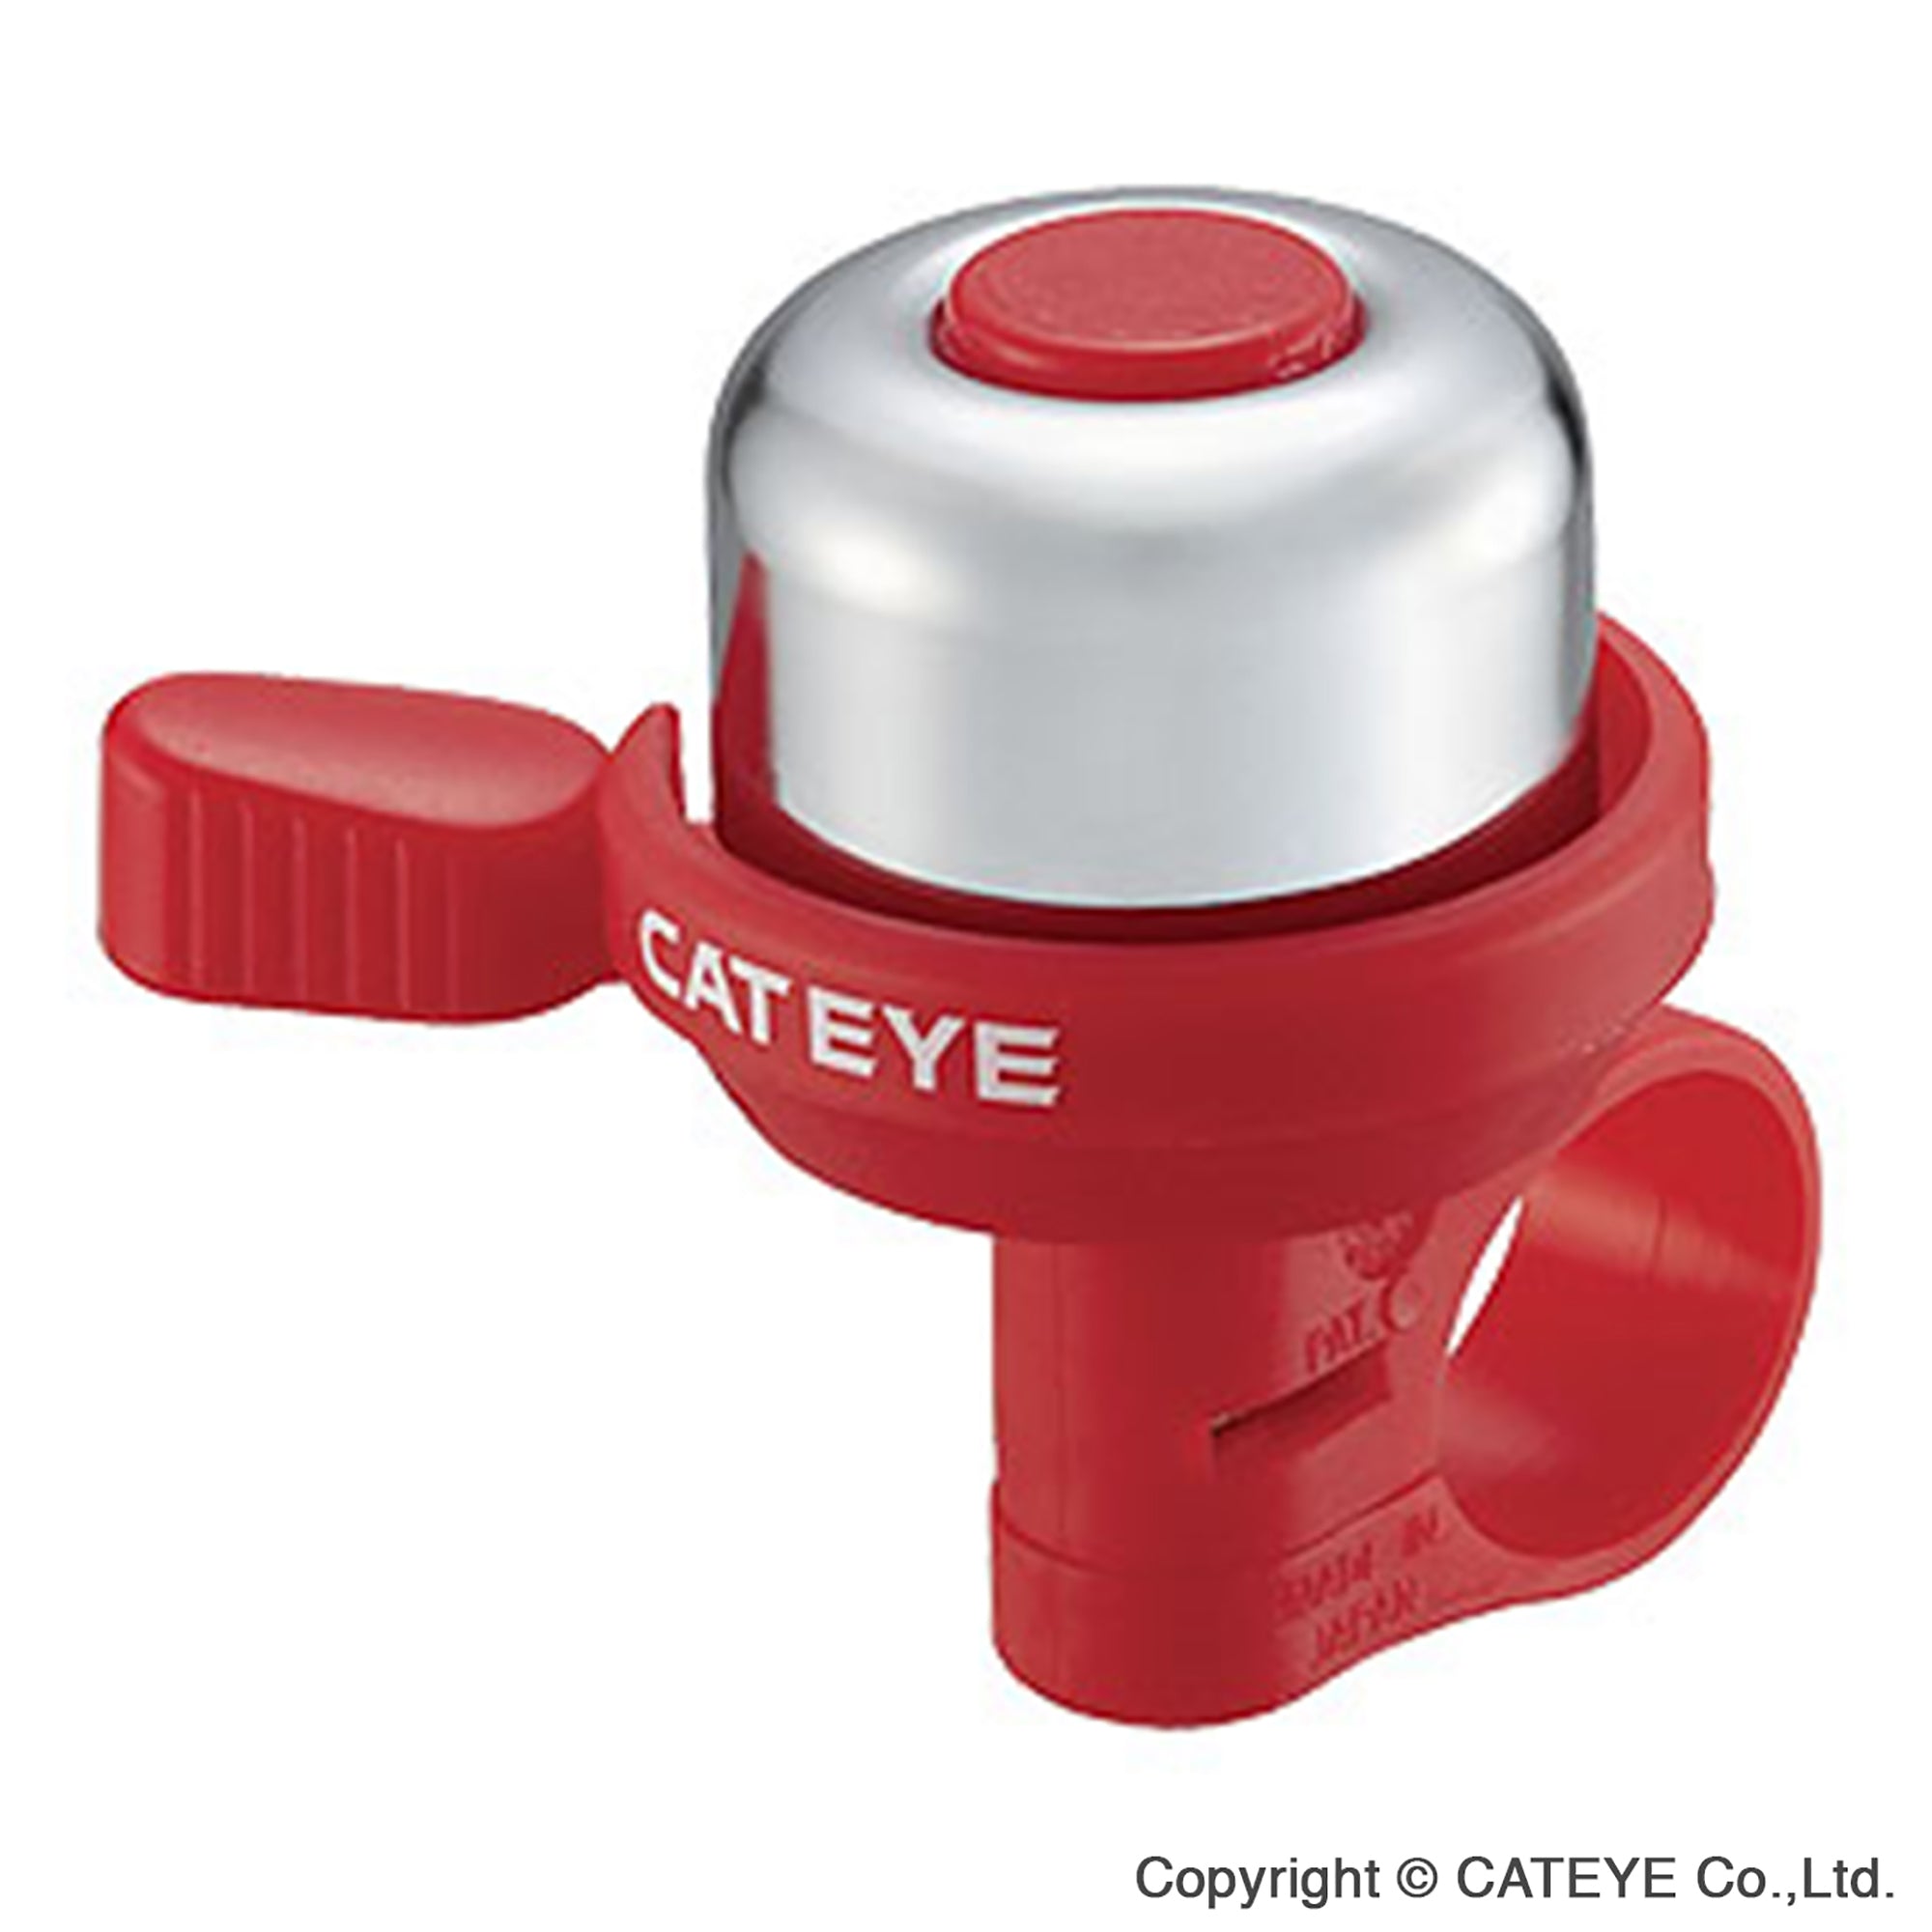 Cateye PB-1000 Wind Brass Bike Bell Red